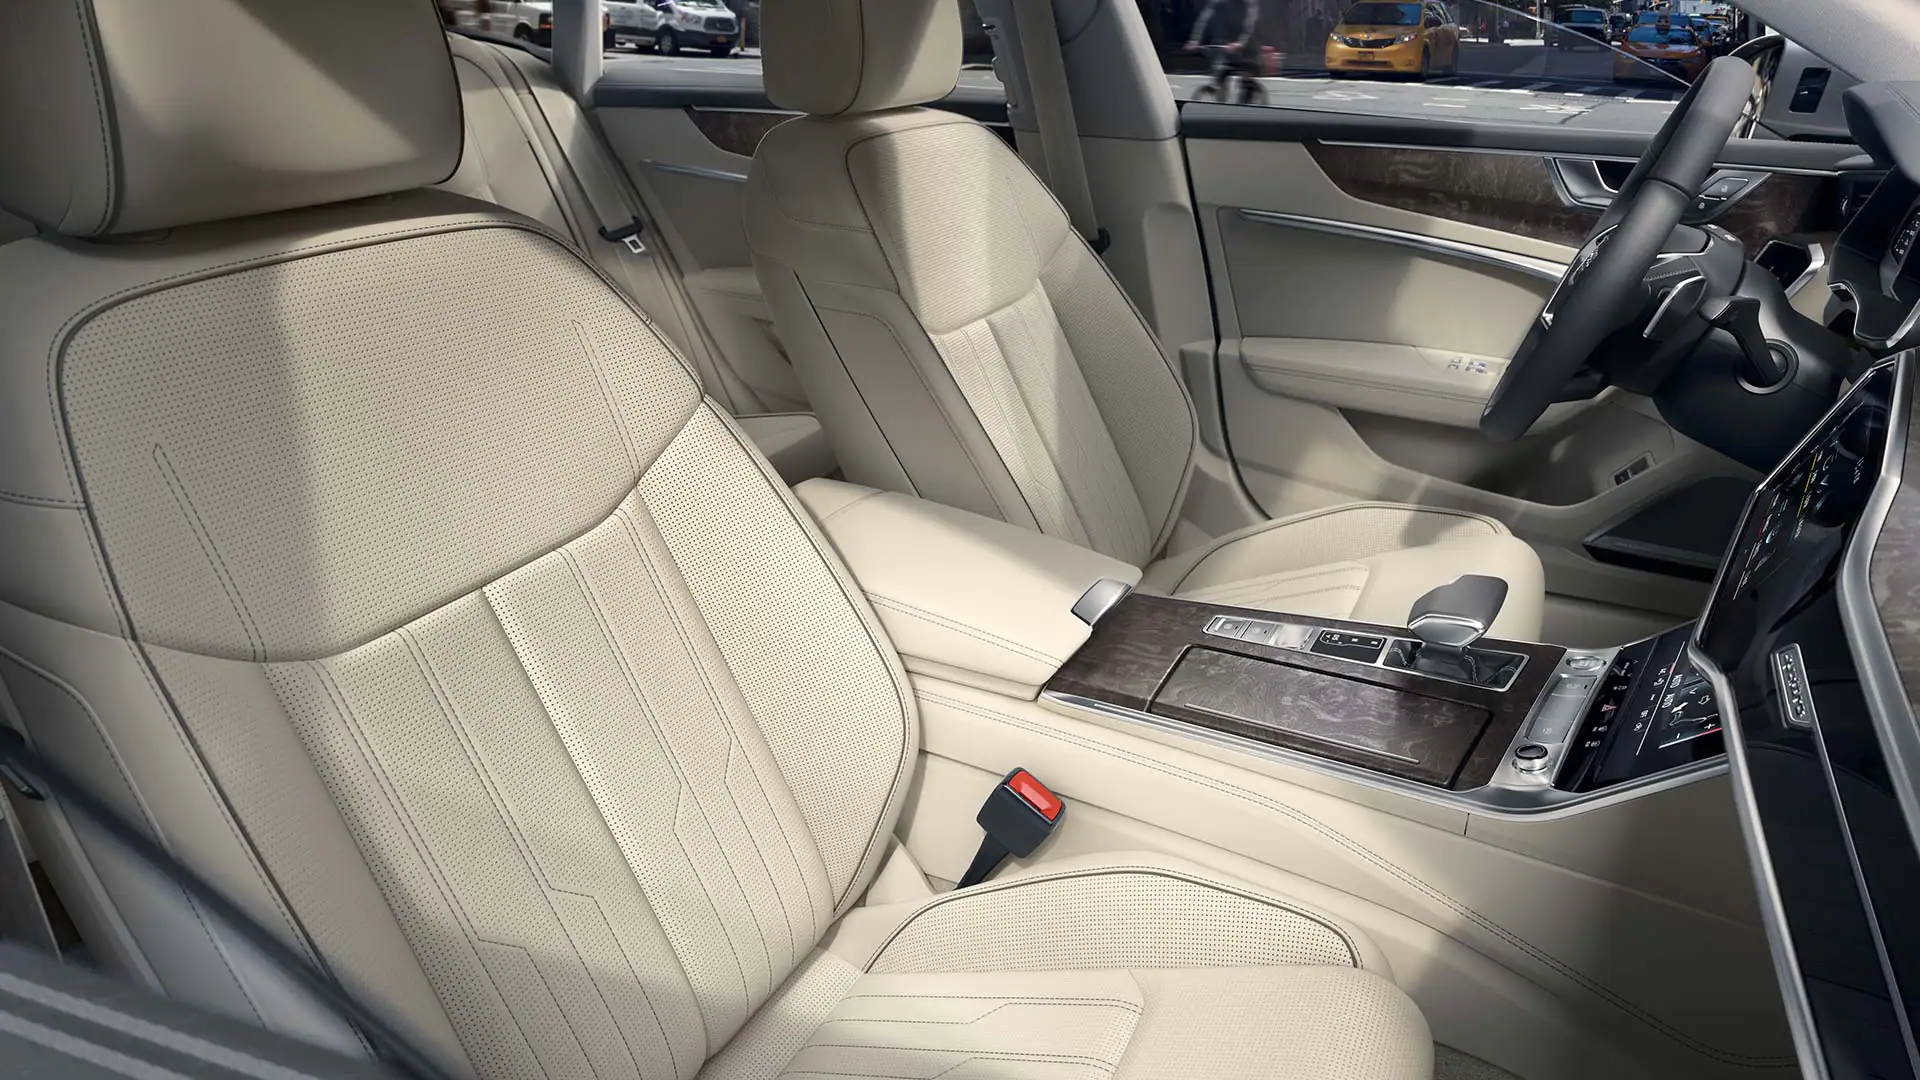 Audi A7 Sportback front seats in cream